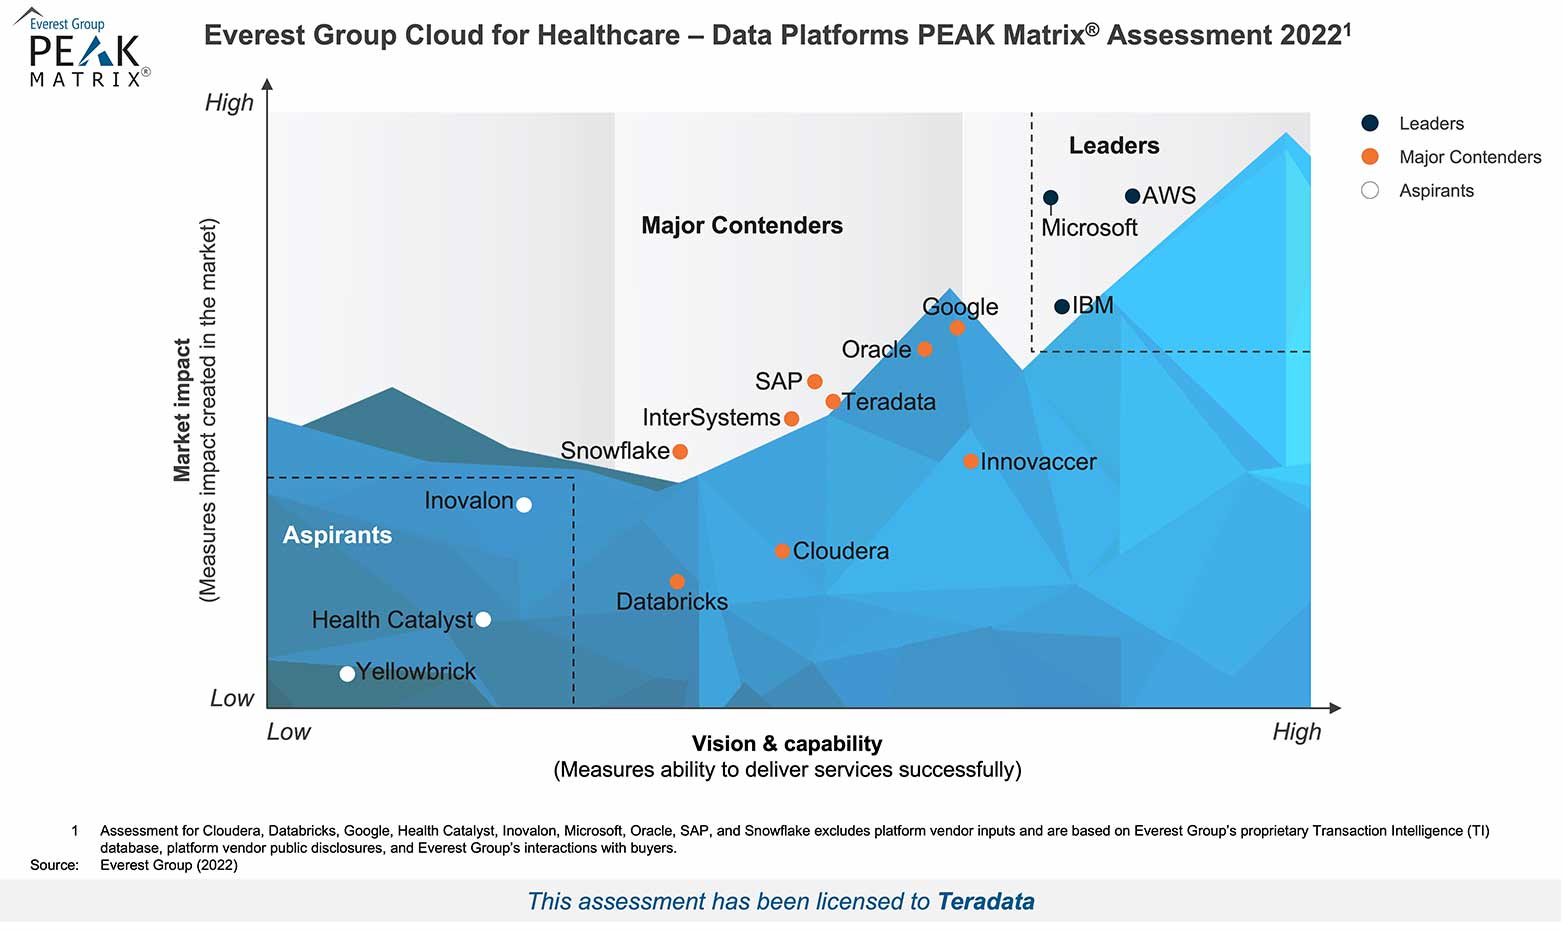 PEAK Matrix: Everest Group Cloud for Healthcare - Data Platforms